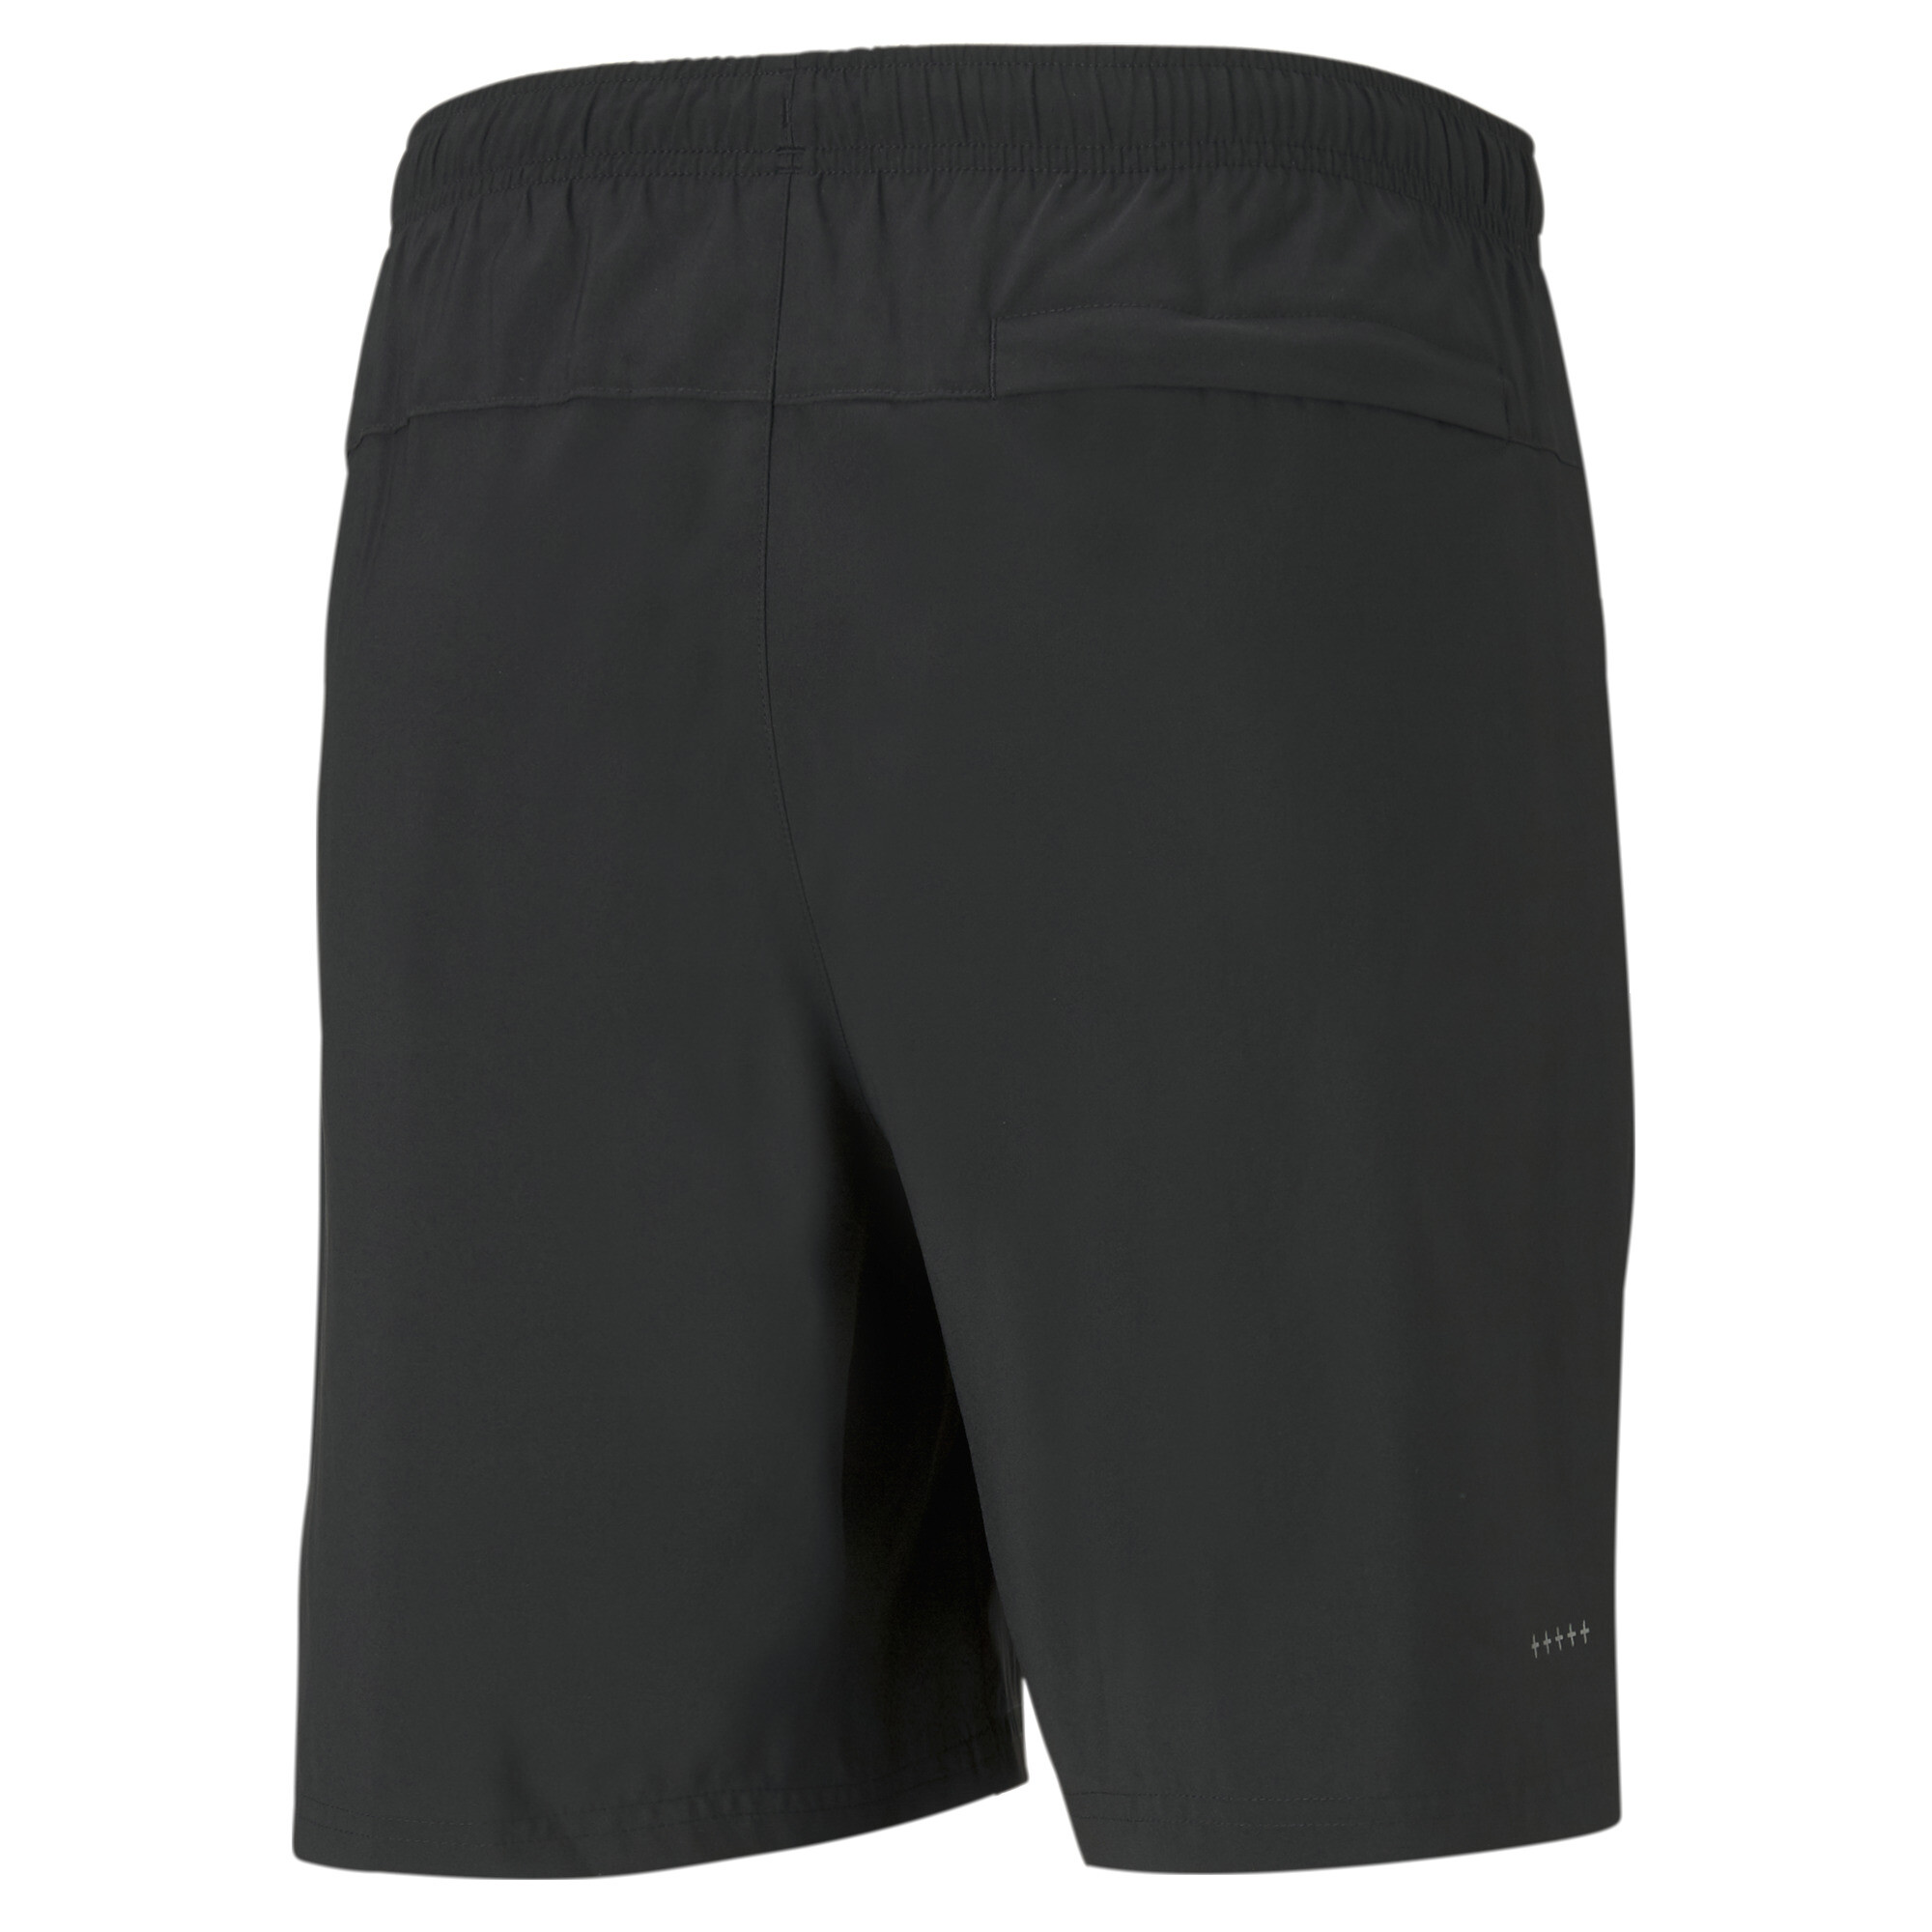 Men's PUMA Favourite Woven 7 Session Running Shorts In Black, Size Medium